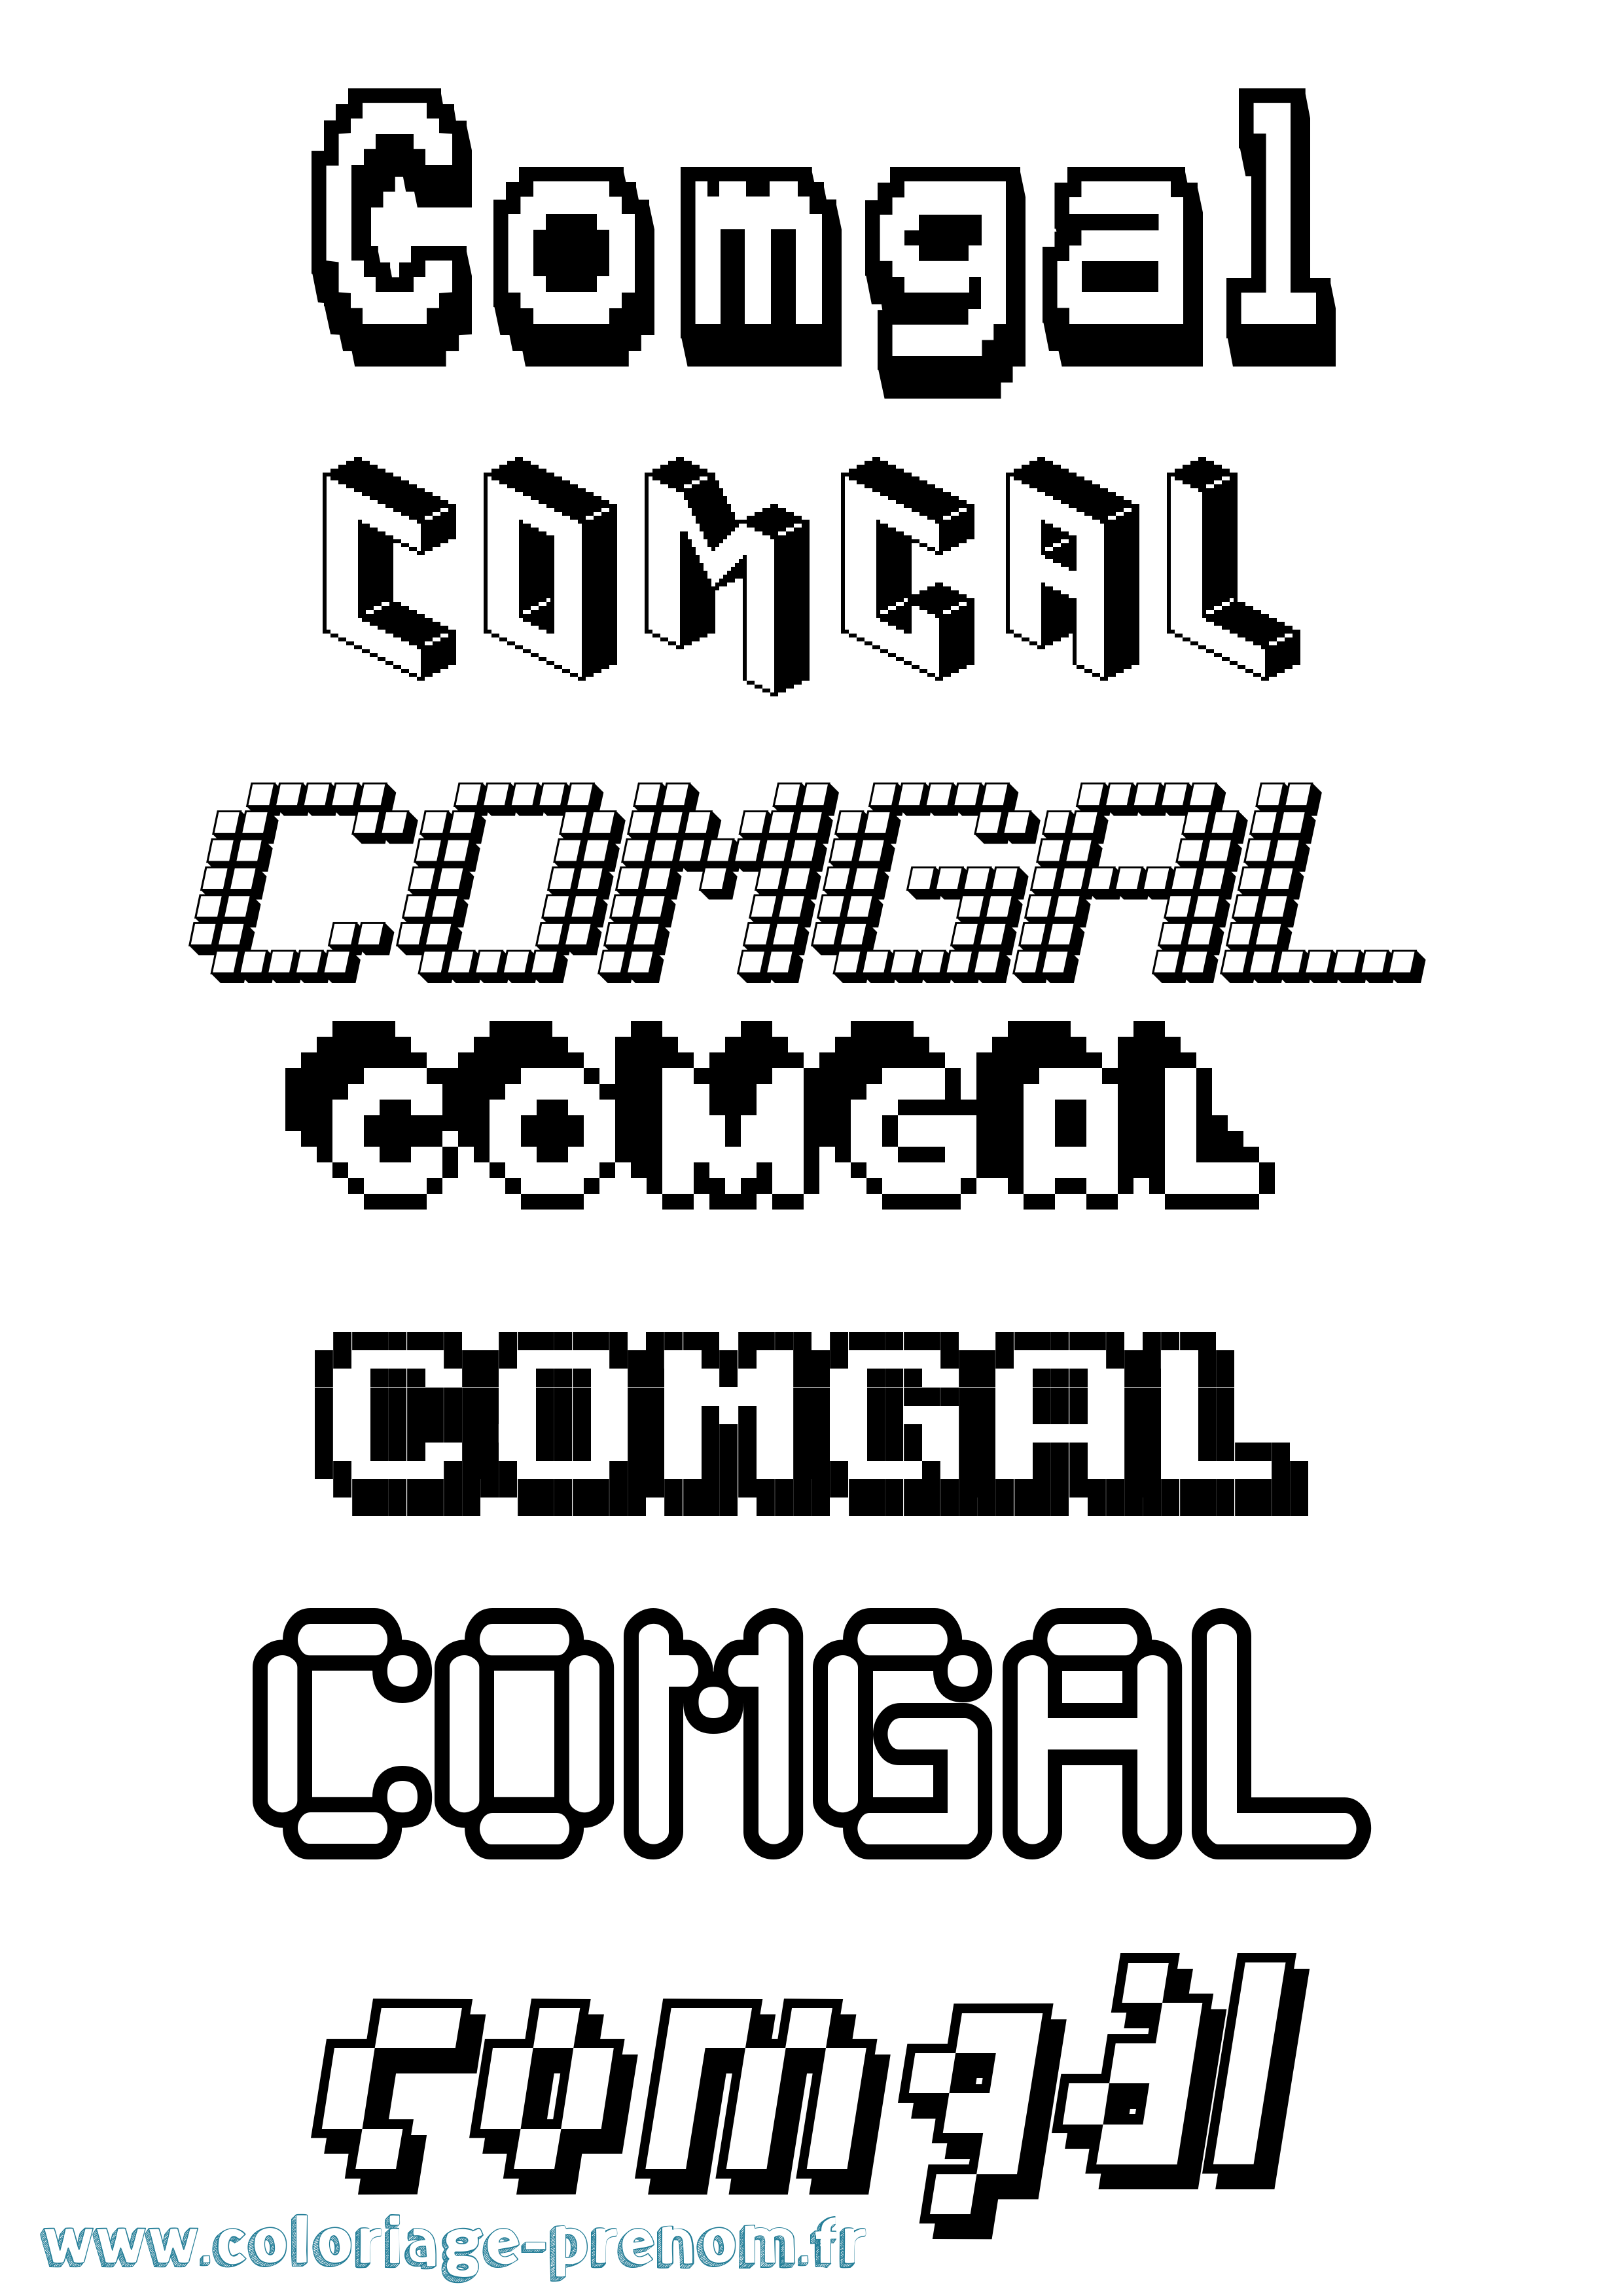 Coloriage prénom Comgal Pixel